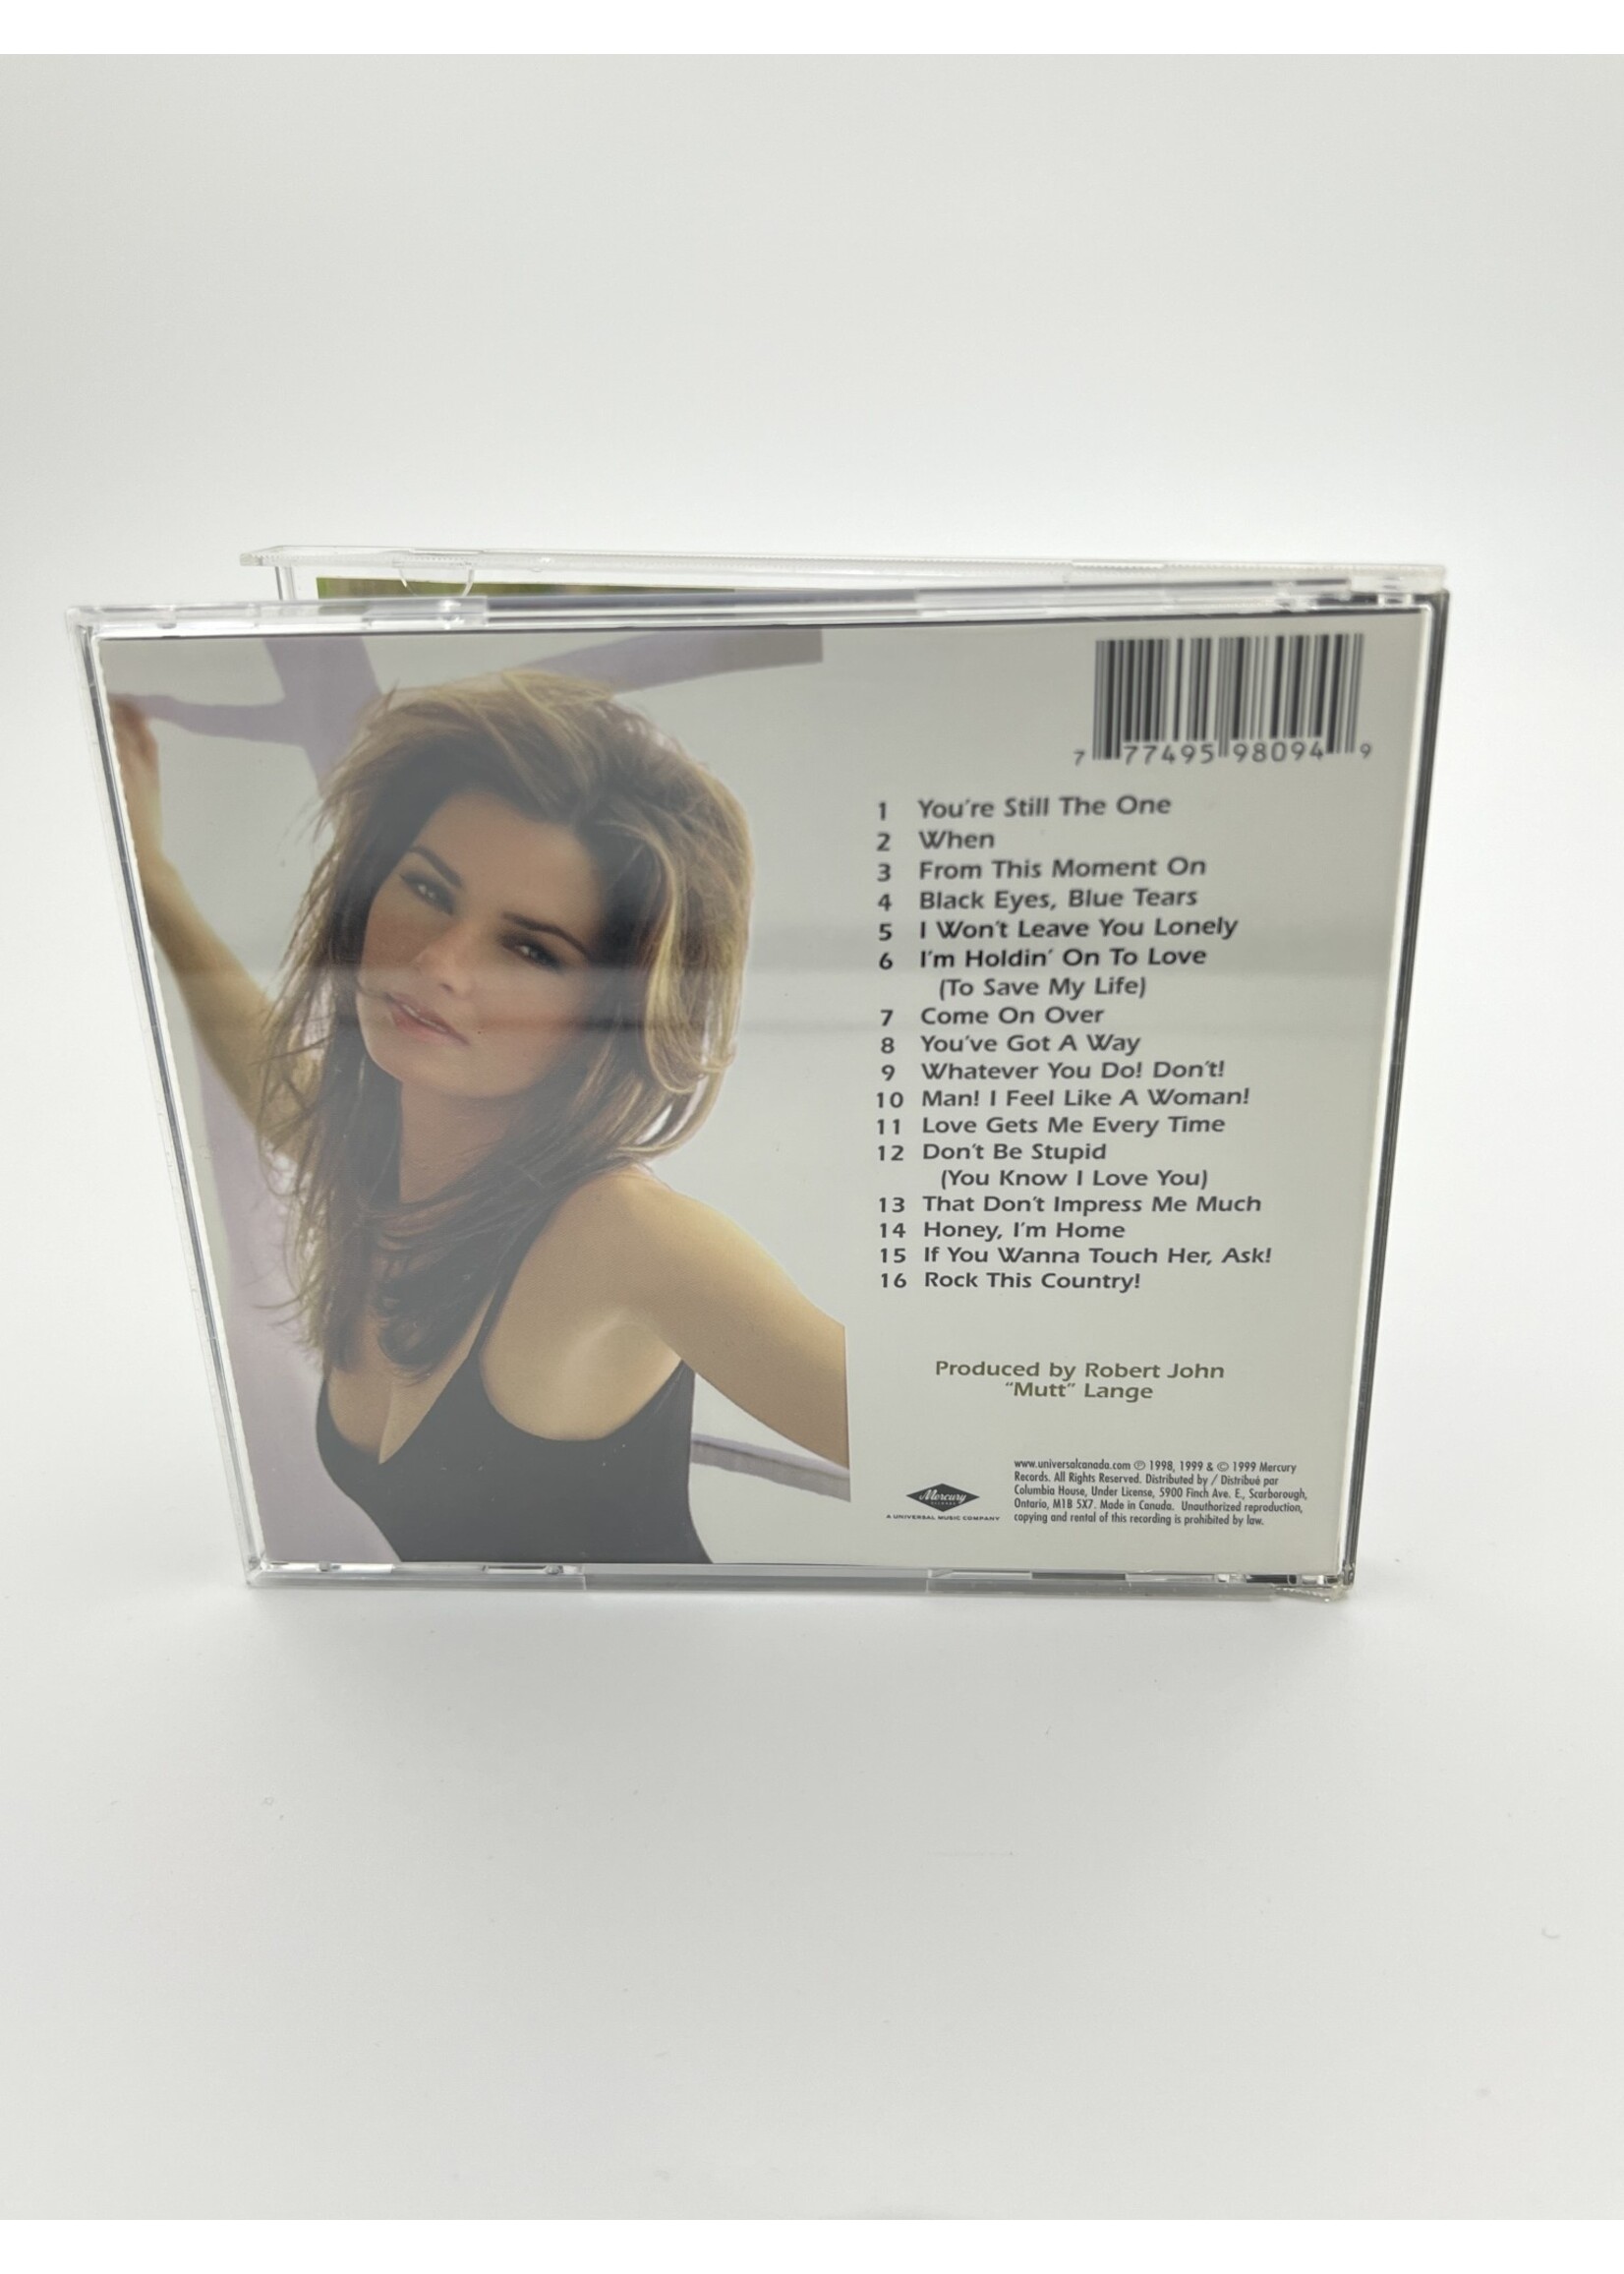 CD Shania Twain Come On Over CD